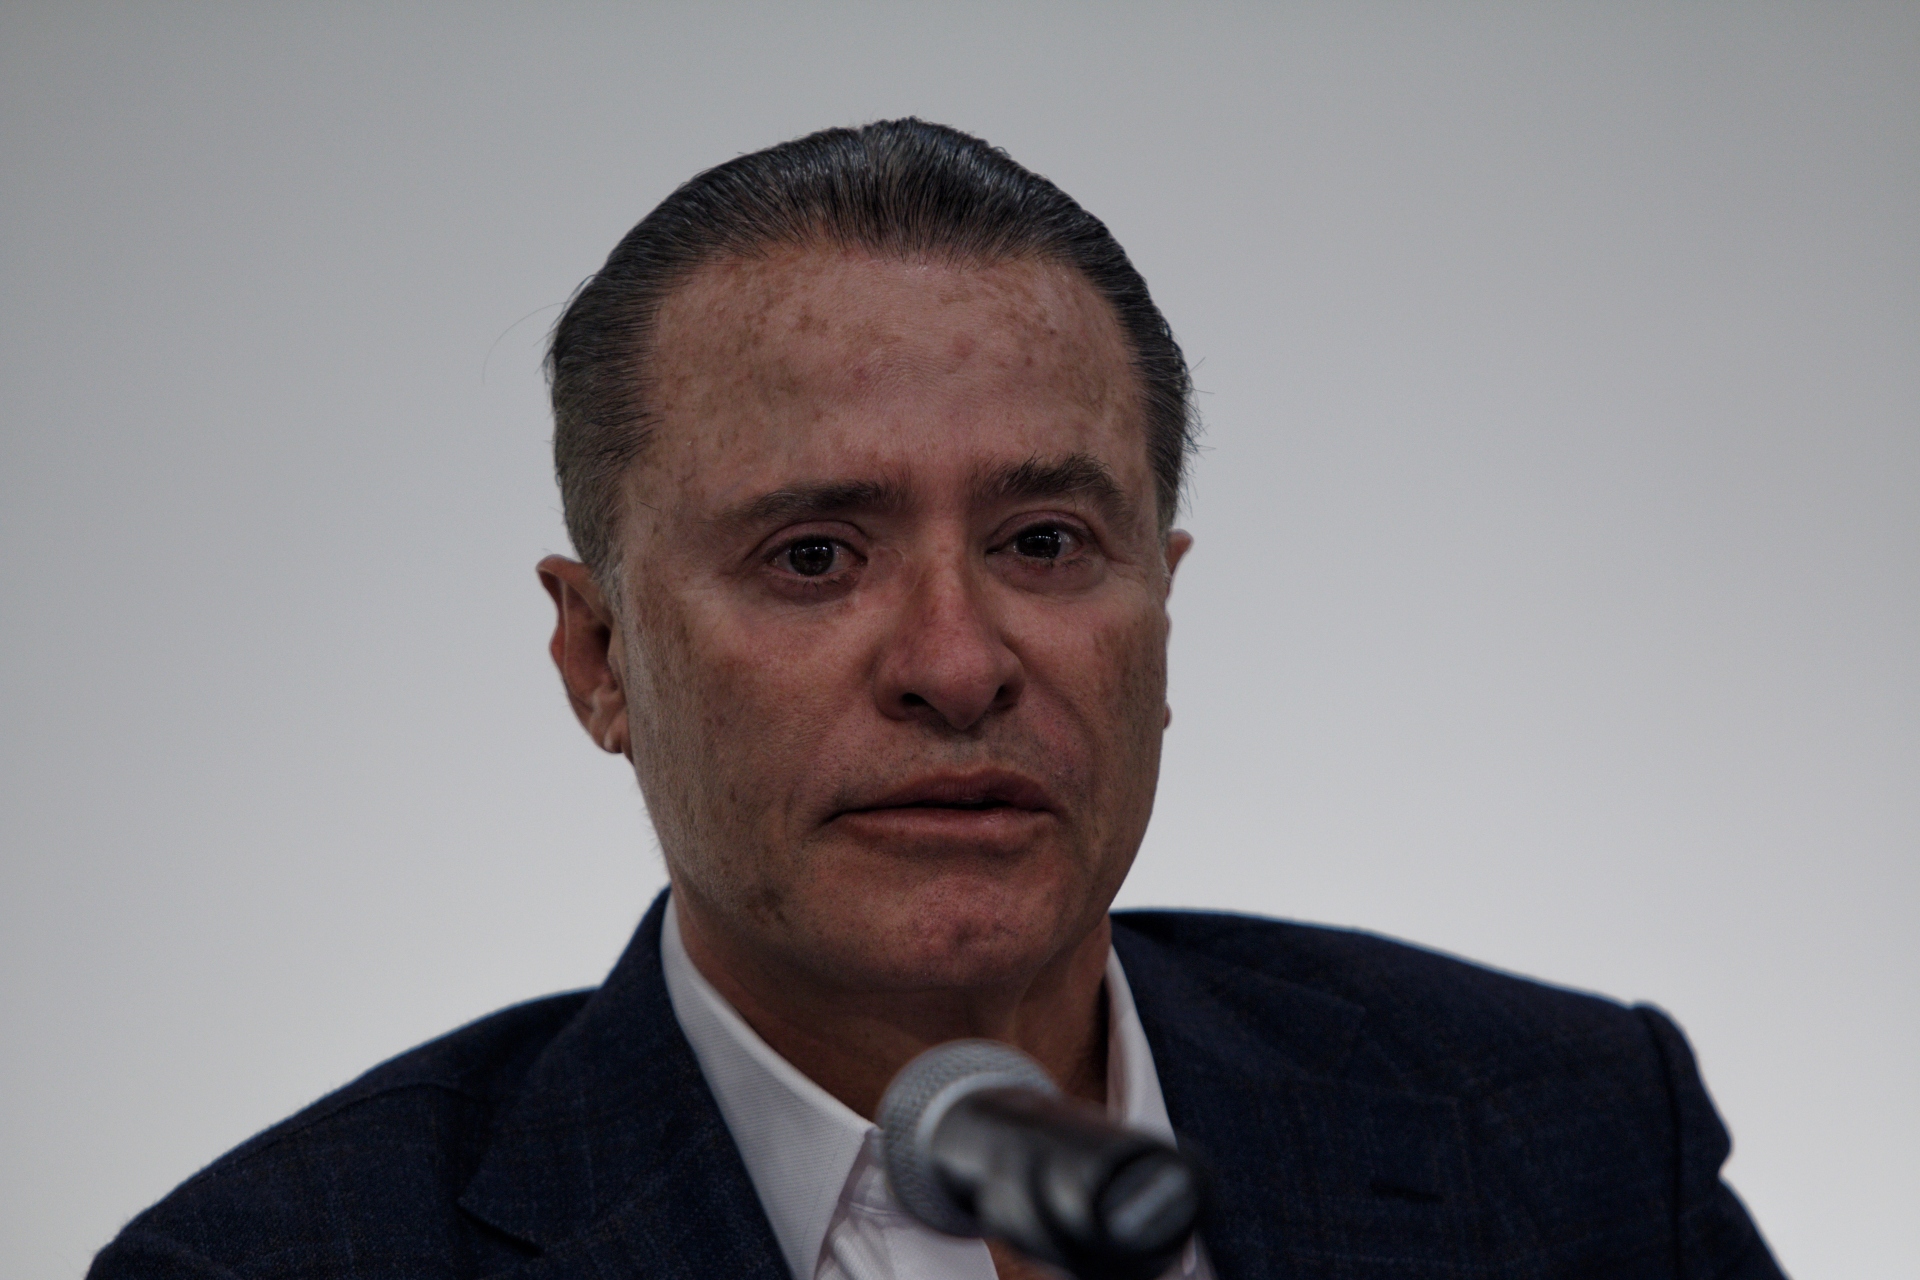 Quirino Ordaz Coppel, el gobernador de Sinaloa que ha invertido extrañamente en proyectos sin respaldo (Foto: Cuartoscuro)